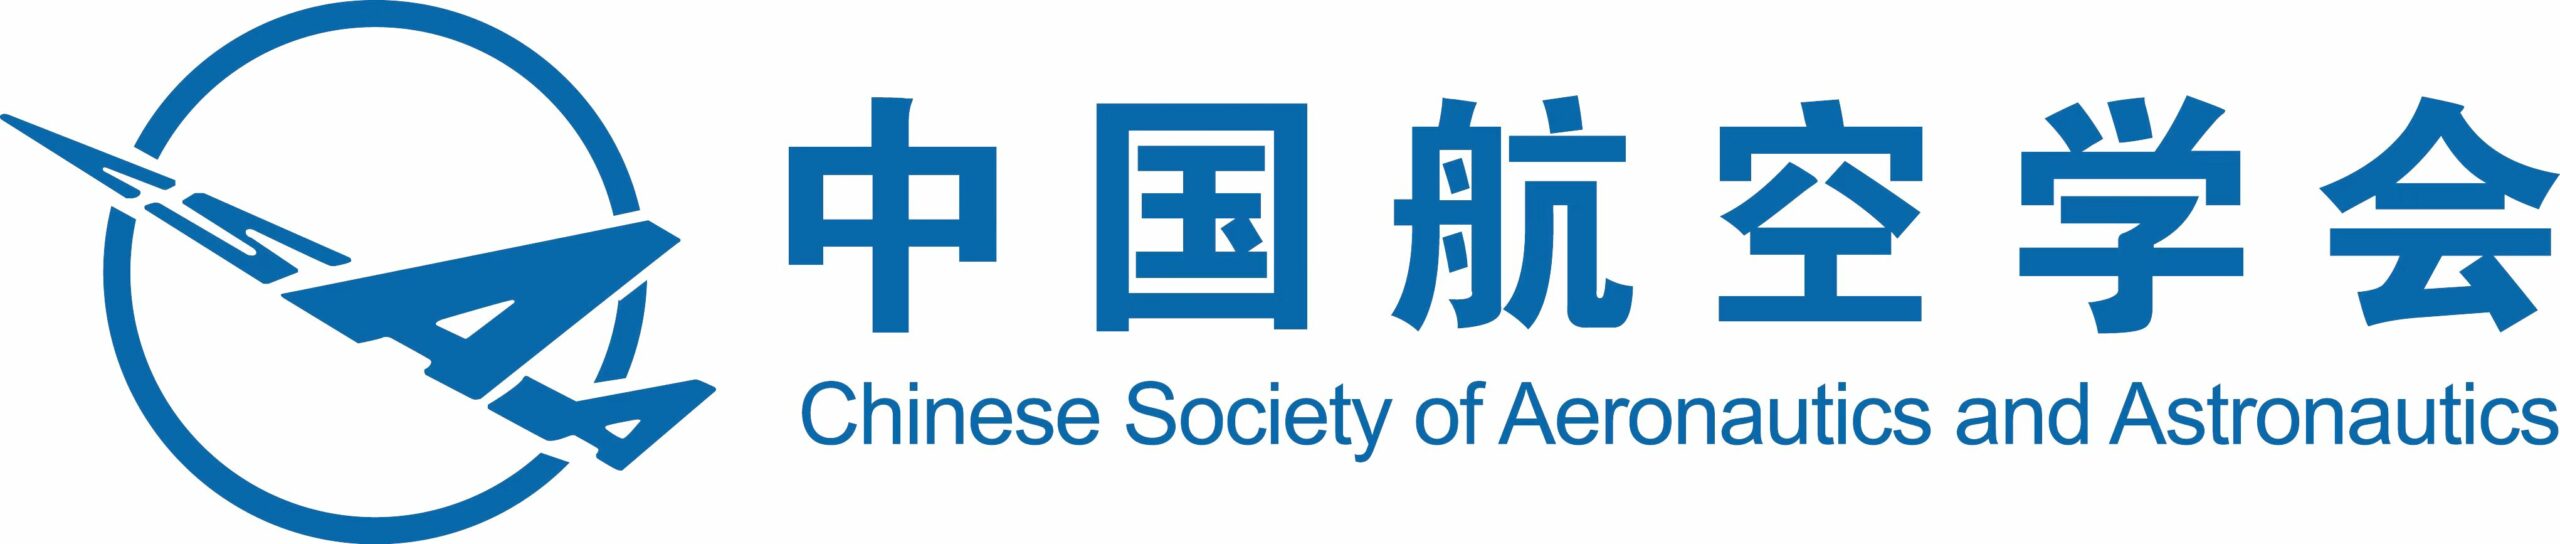 CSAA logo with names